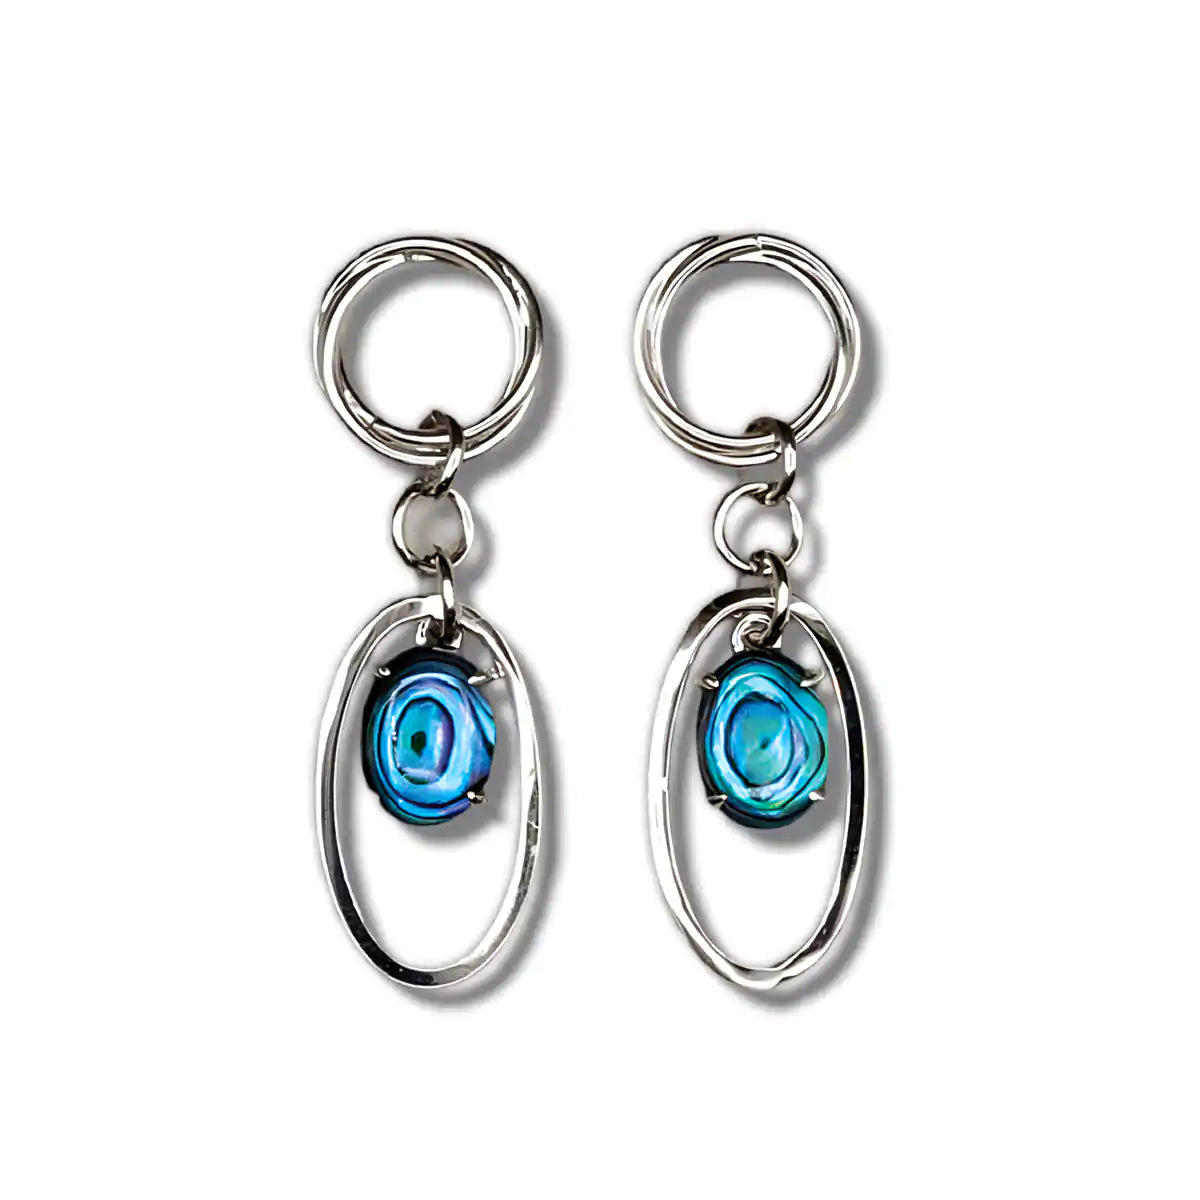 Glacier pearle woven rings earrings